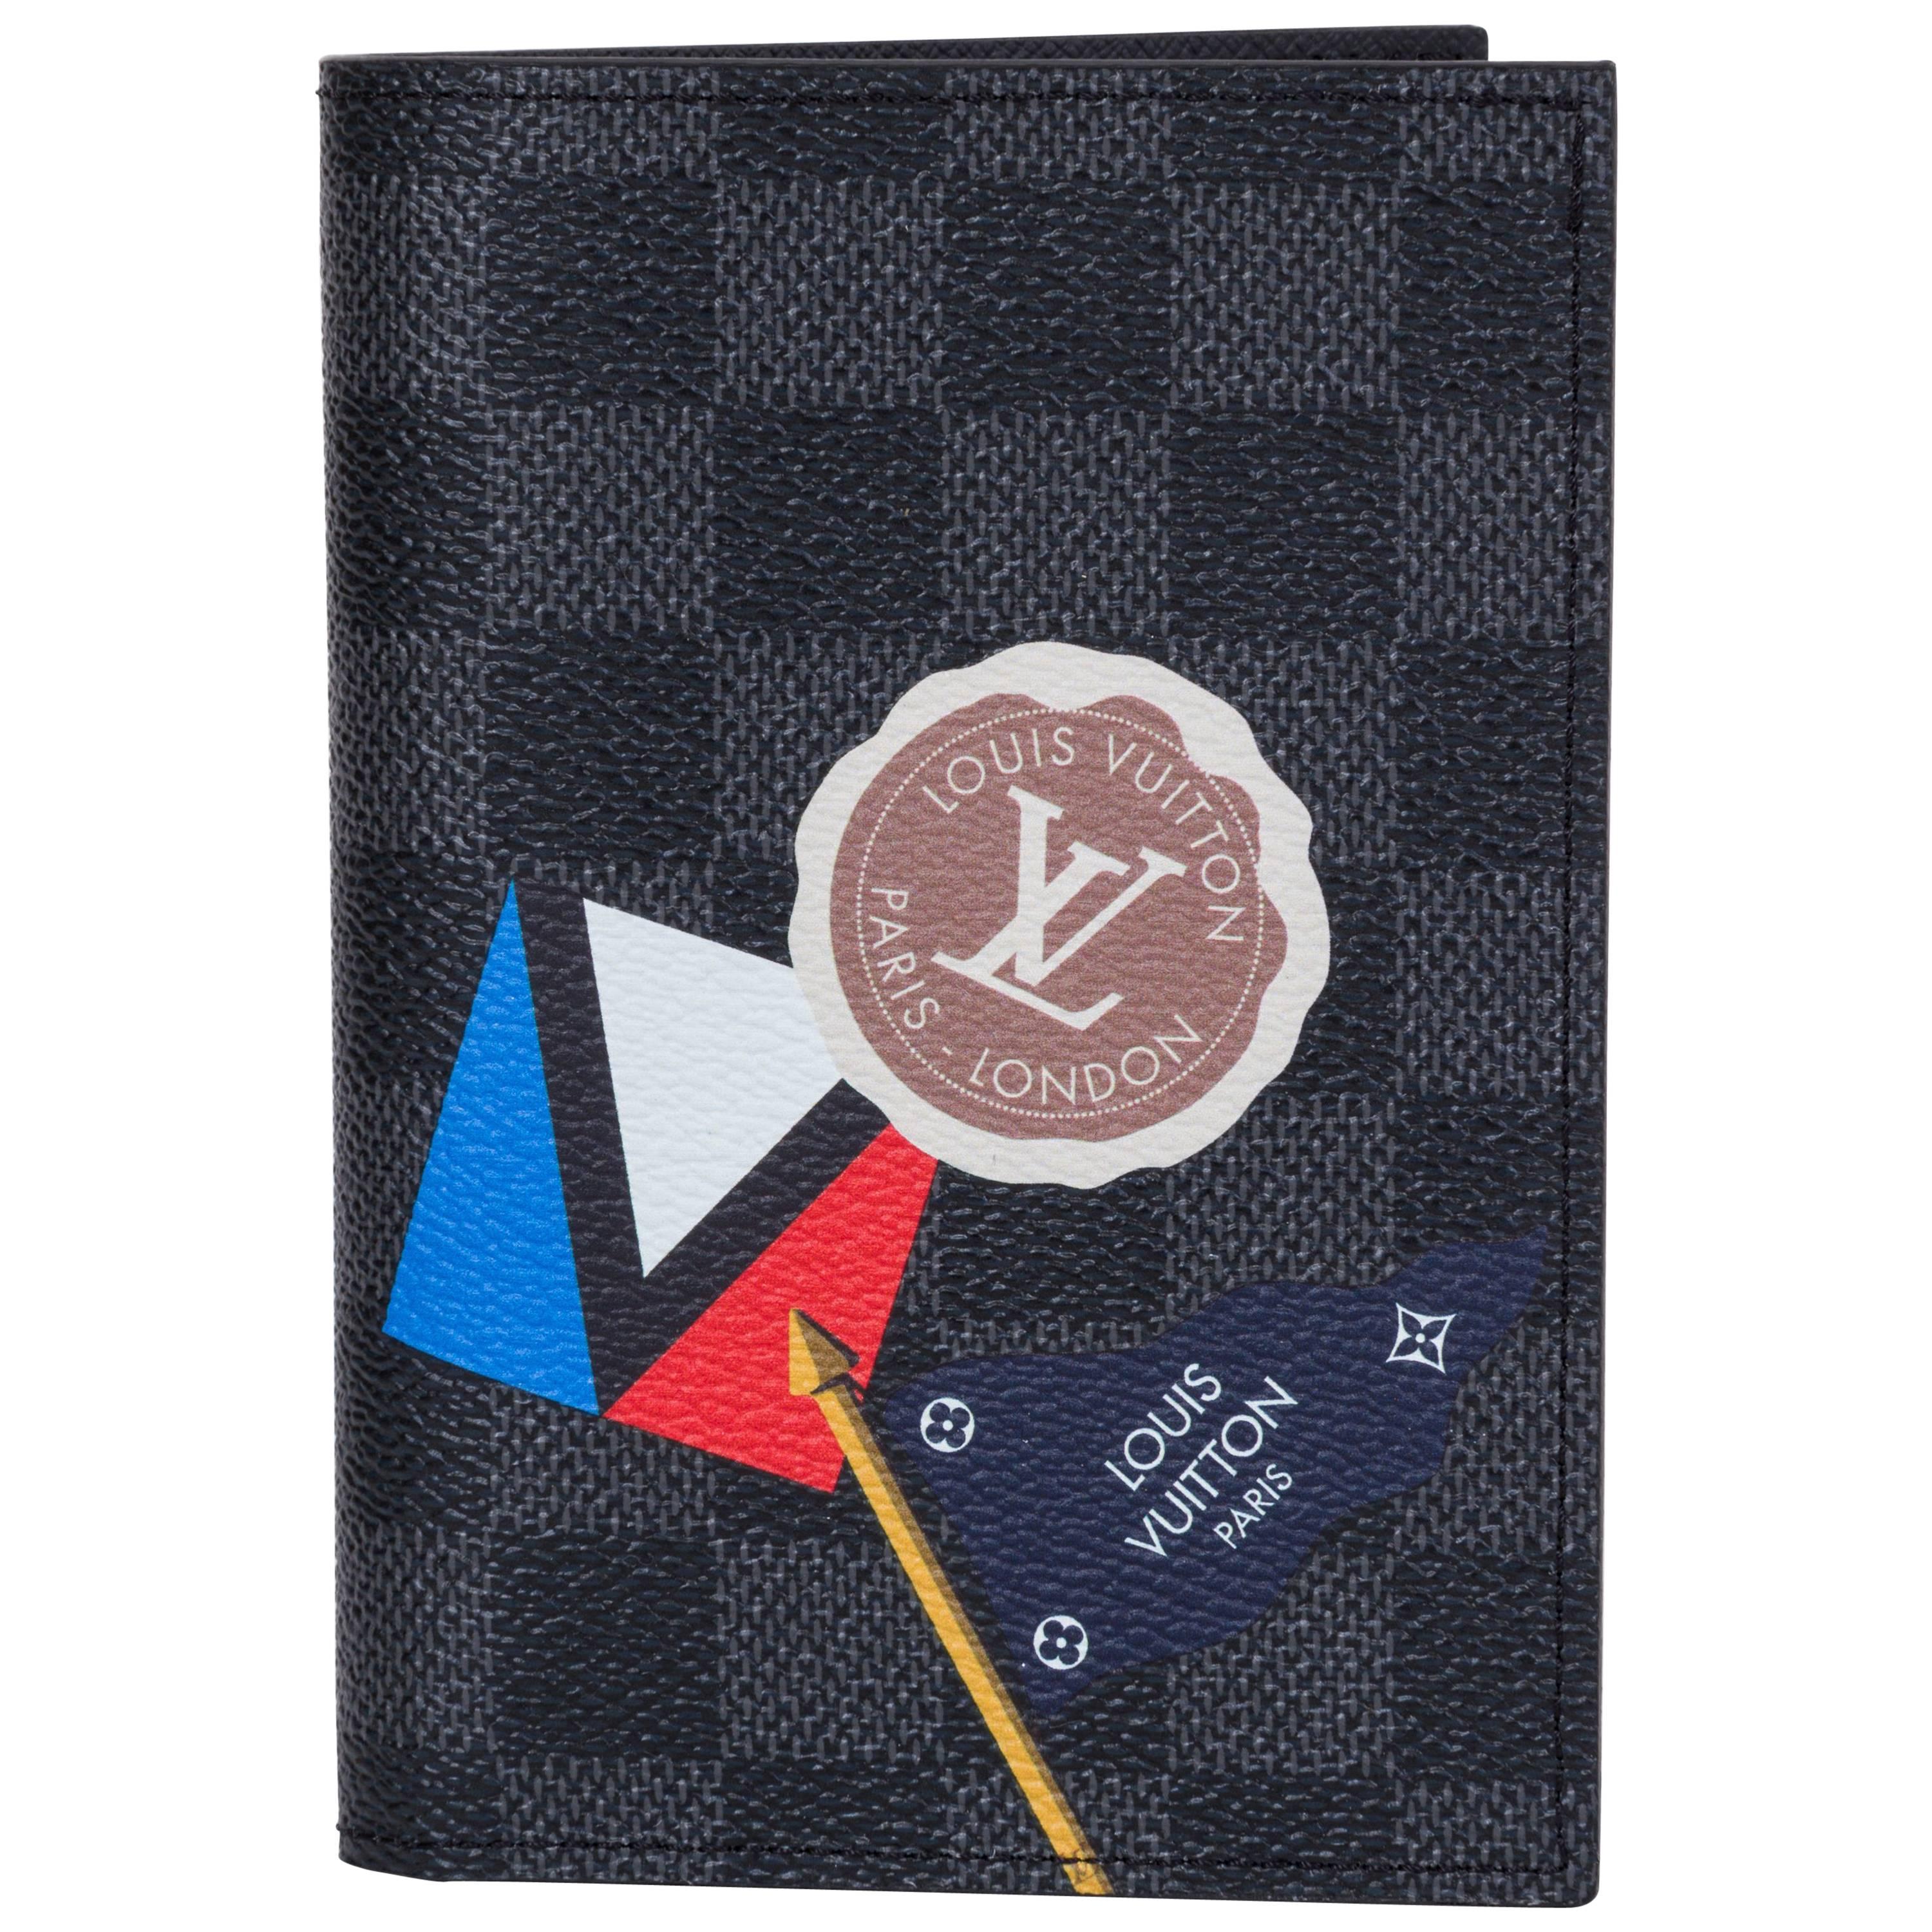 New Louis Vuitton Limited Edition Passport Case 